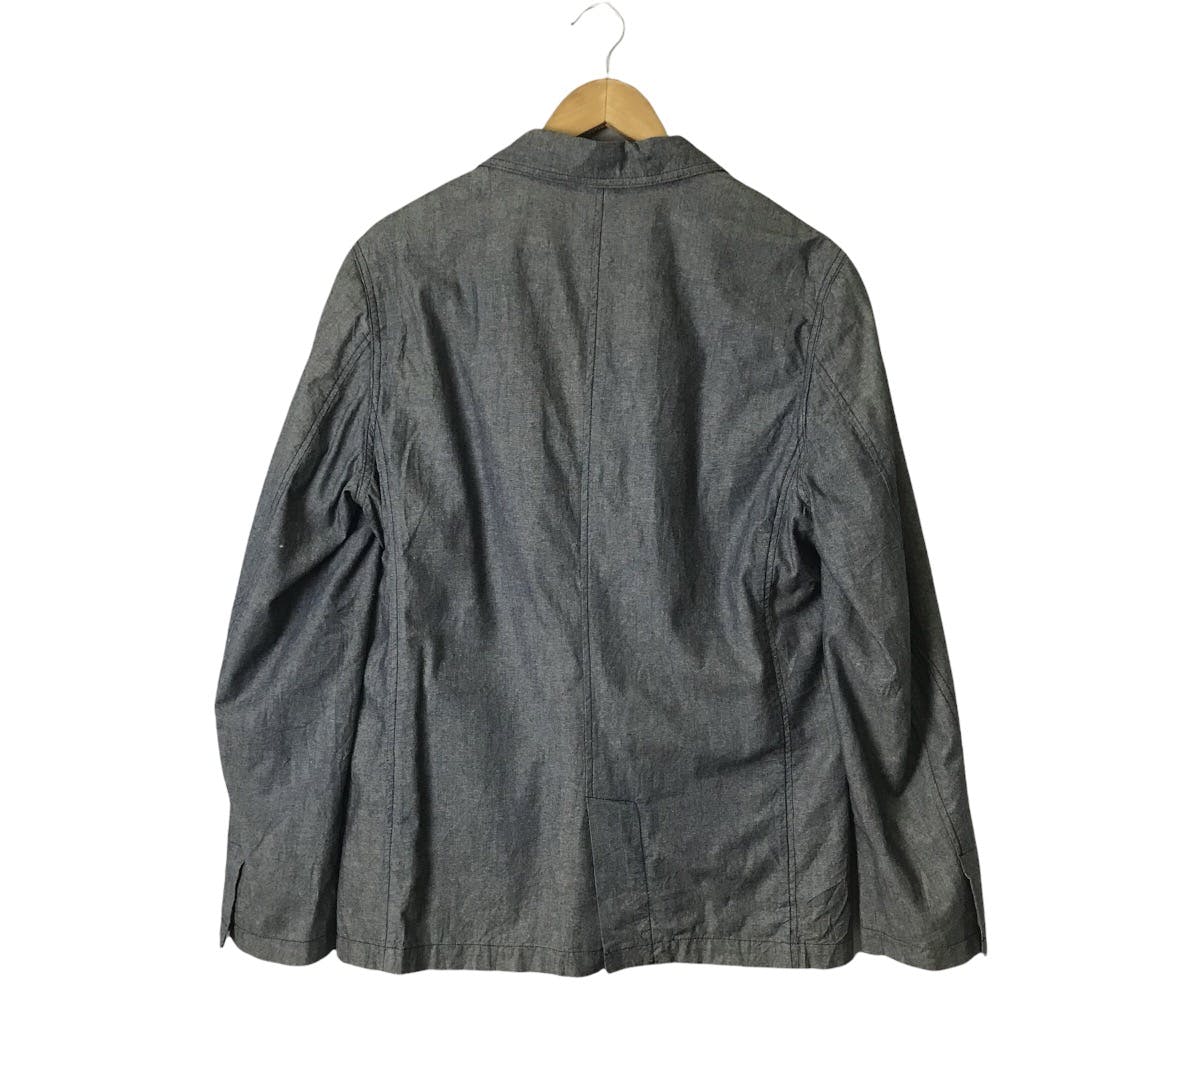 Ben sherman linen chore jacket - 4